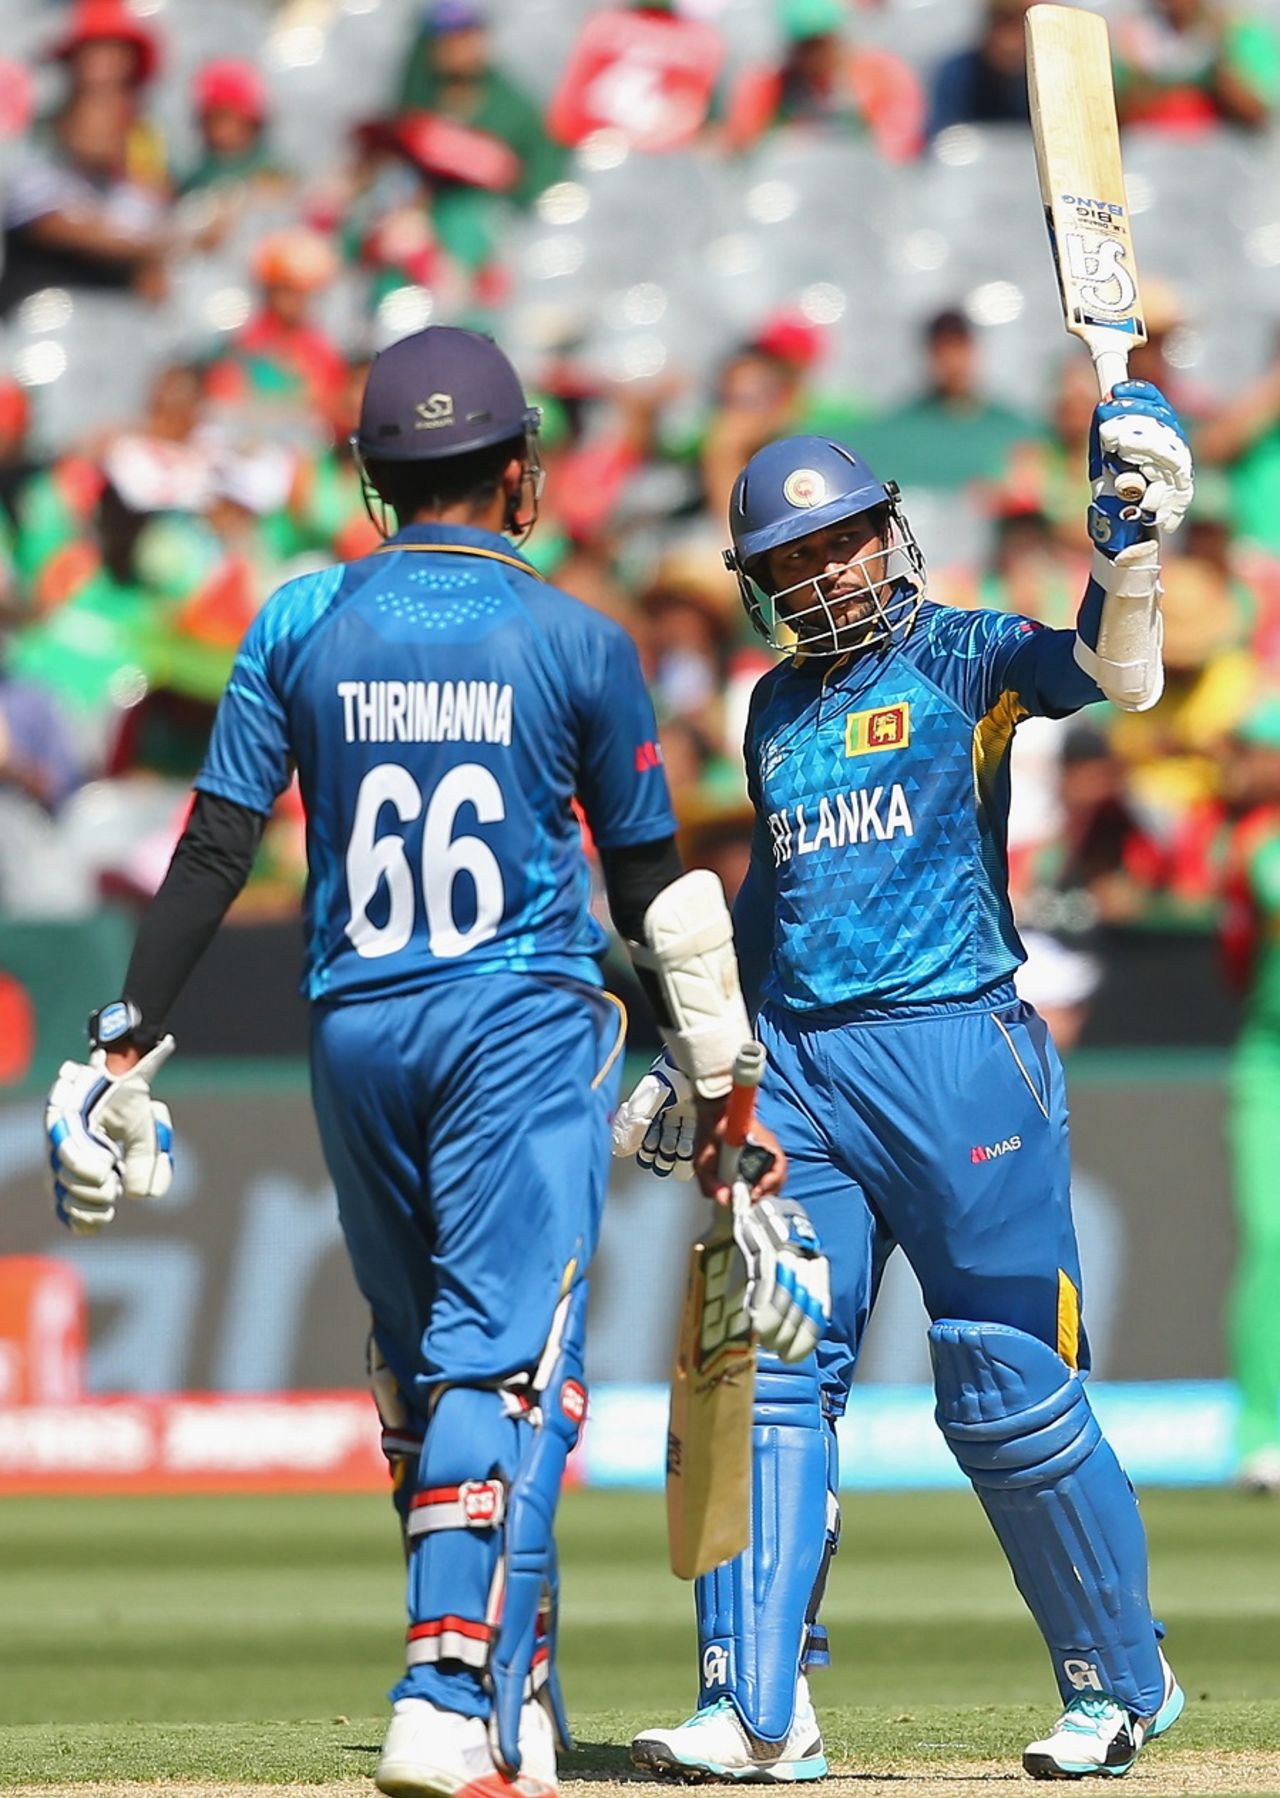 Tillakaratne Dilshan brought up his half-century in 59 balls, Bangladesh v Sri Lanka, World Cup 2015, Group A, Melbourne, February 26, 2015